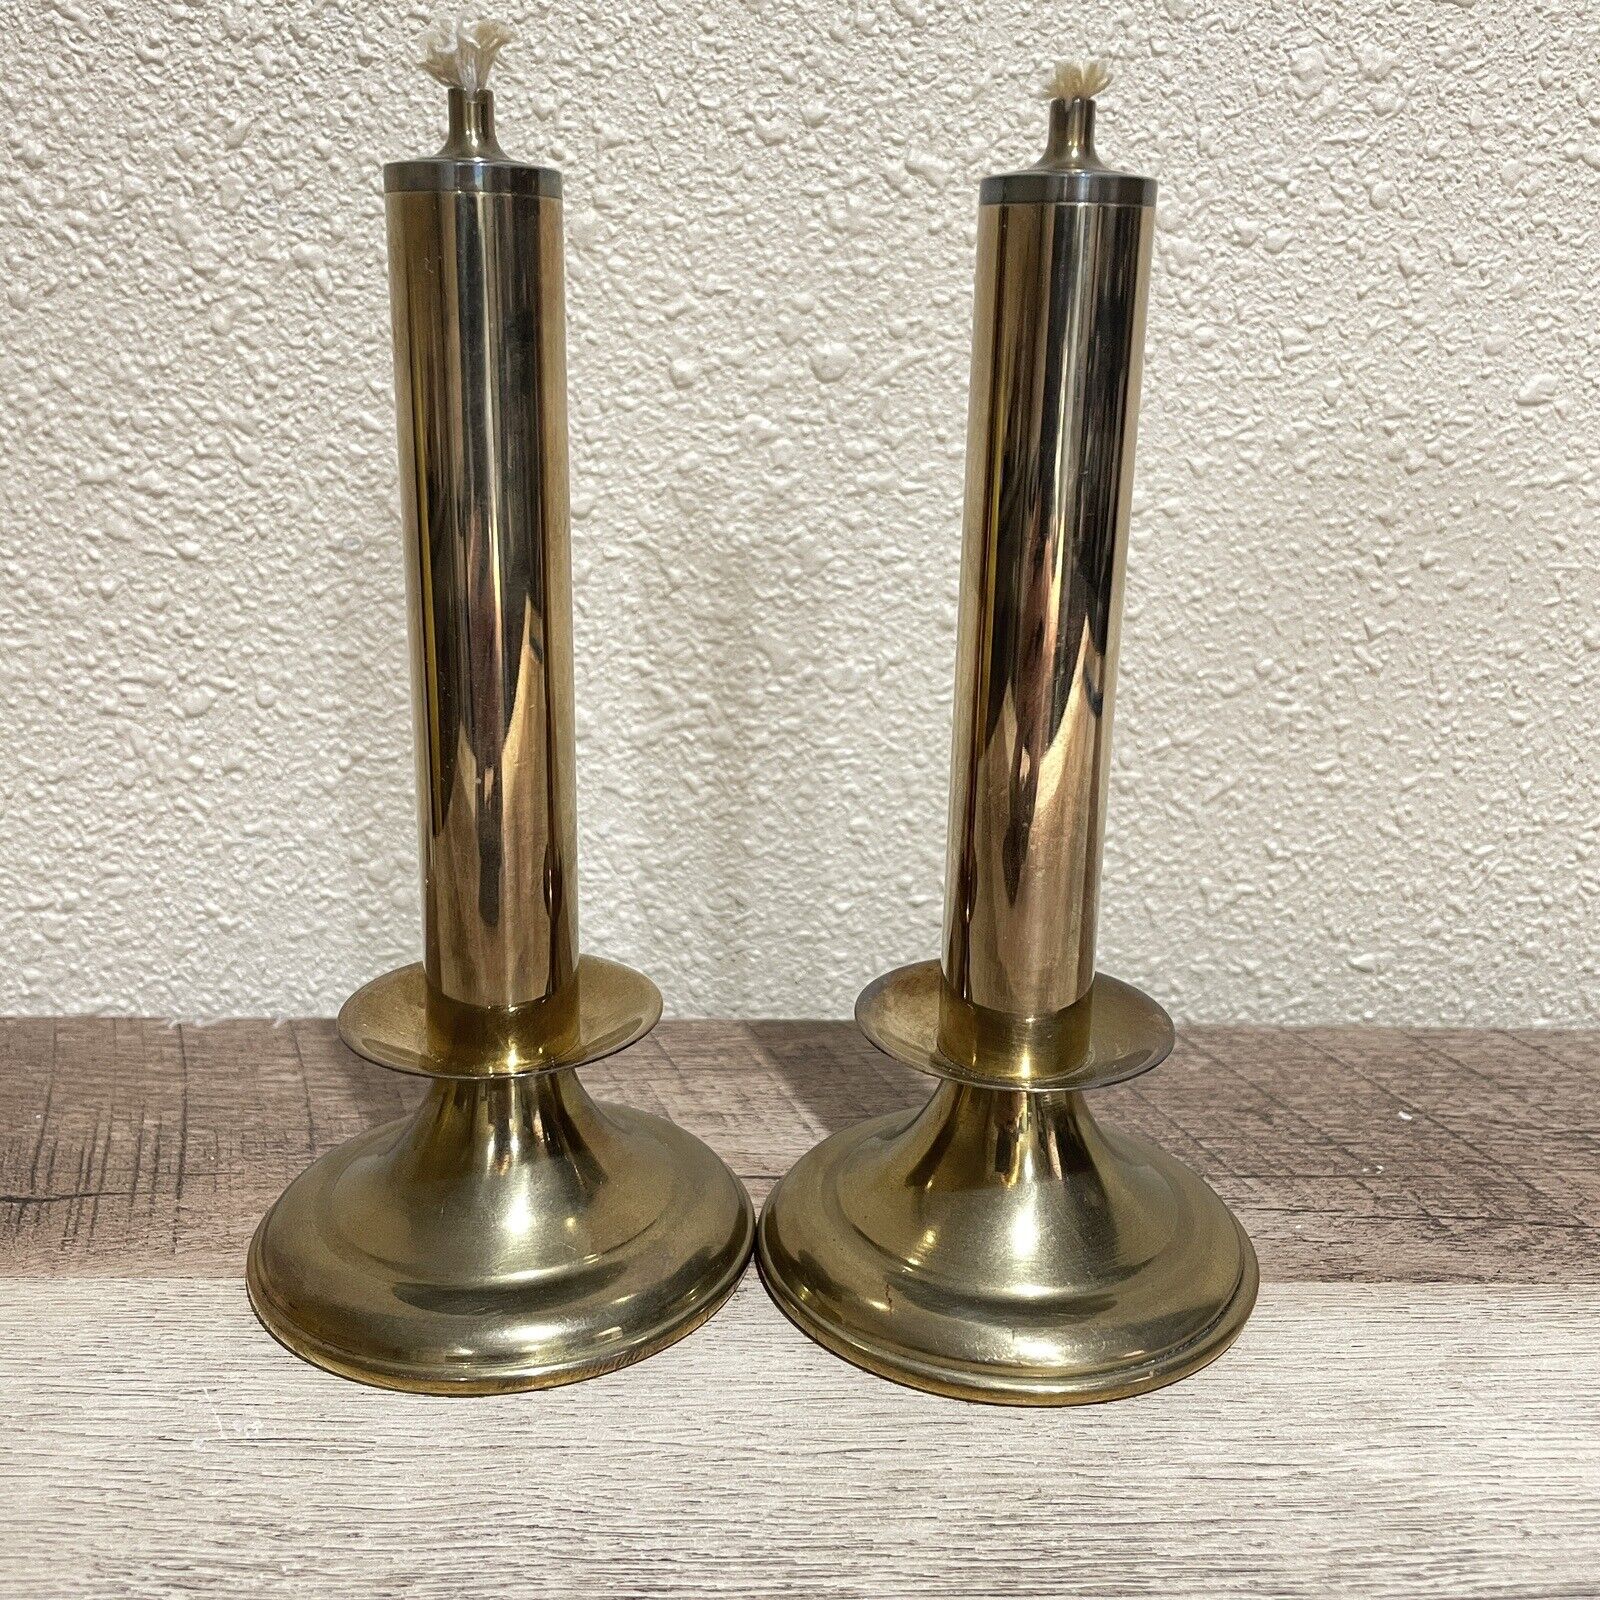 Vintage Birks Brass Candlestick Oil Kerosene Lamp Set Of 2 Matching Brass 6.5” H